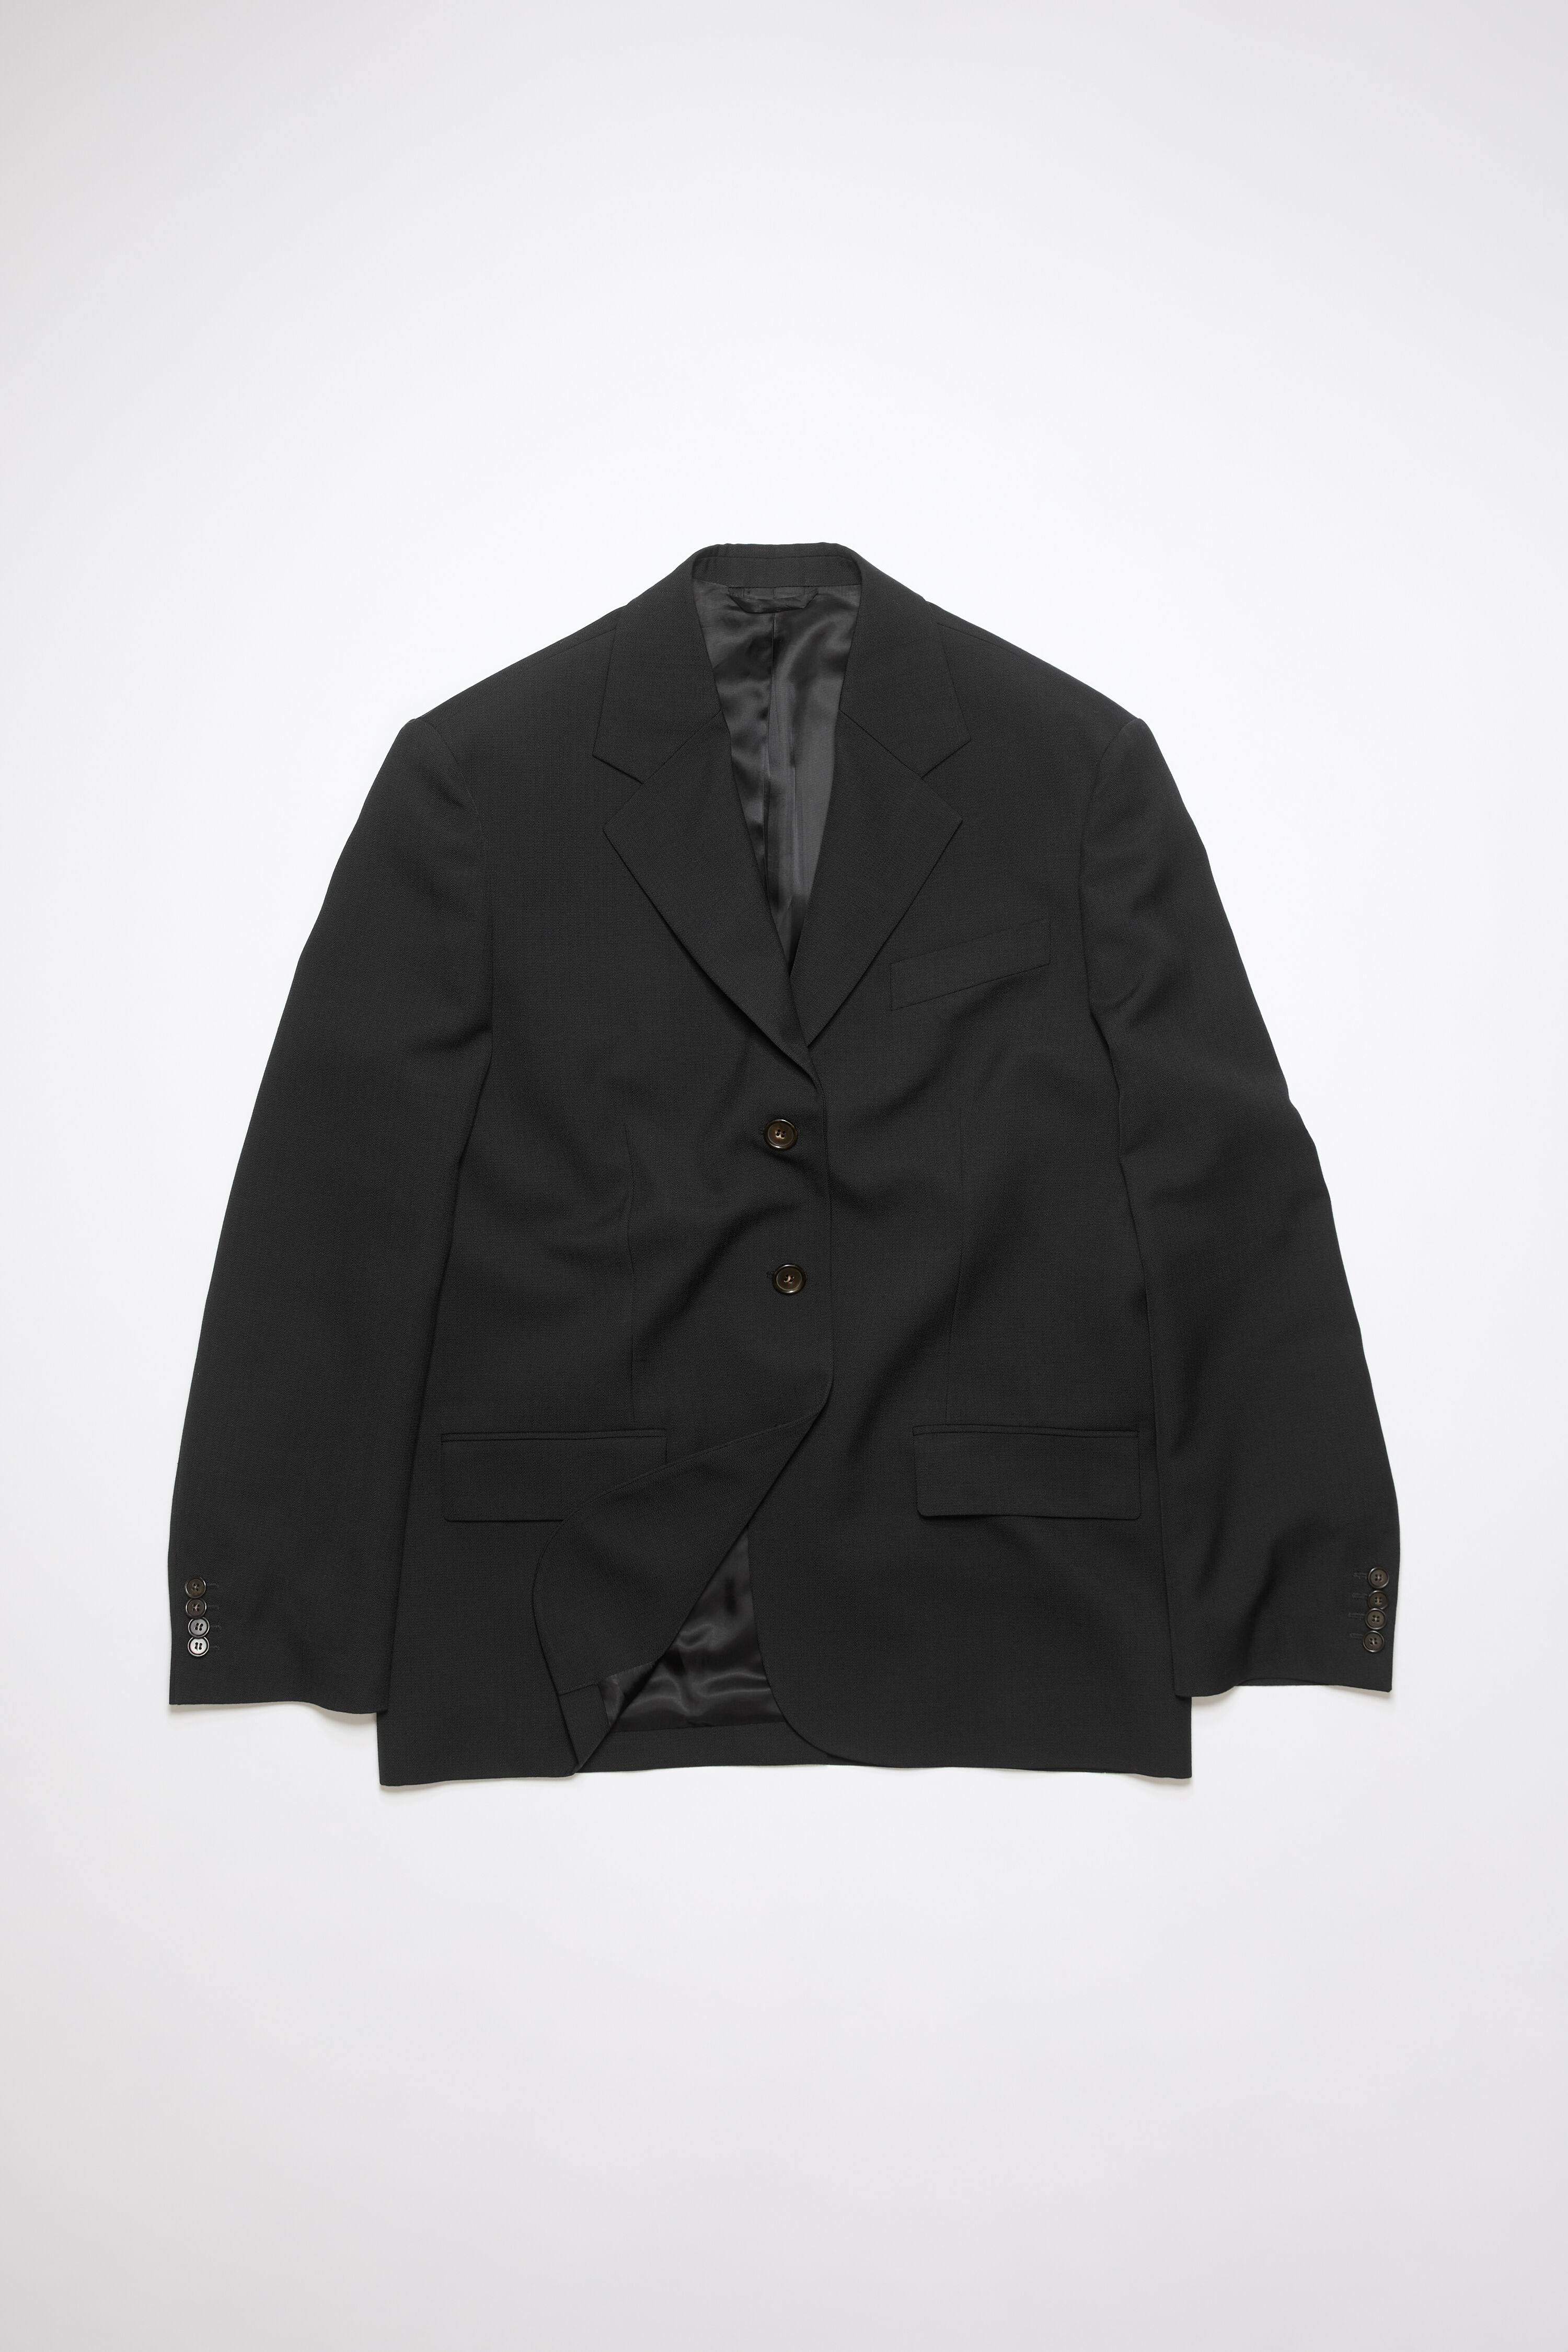 Acne Studios - リラックスフィット スーツジャケット - ブラック